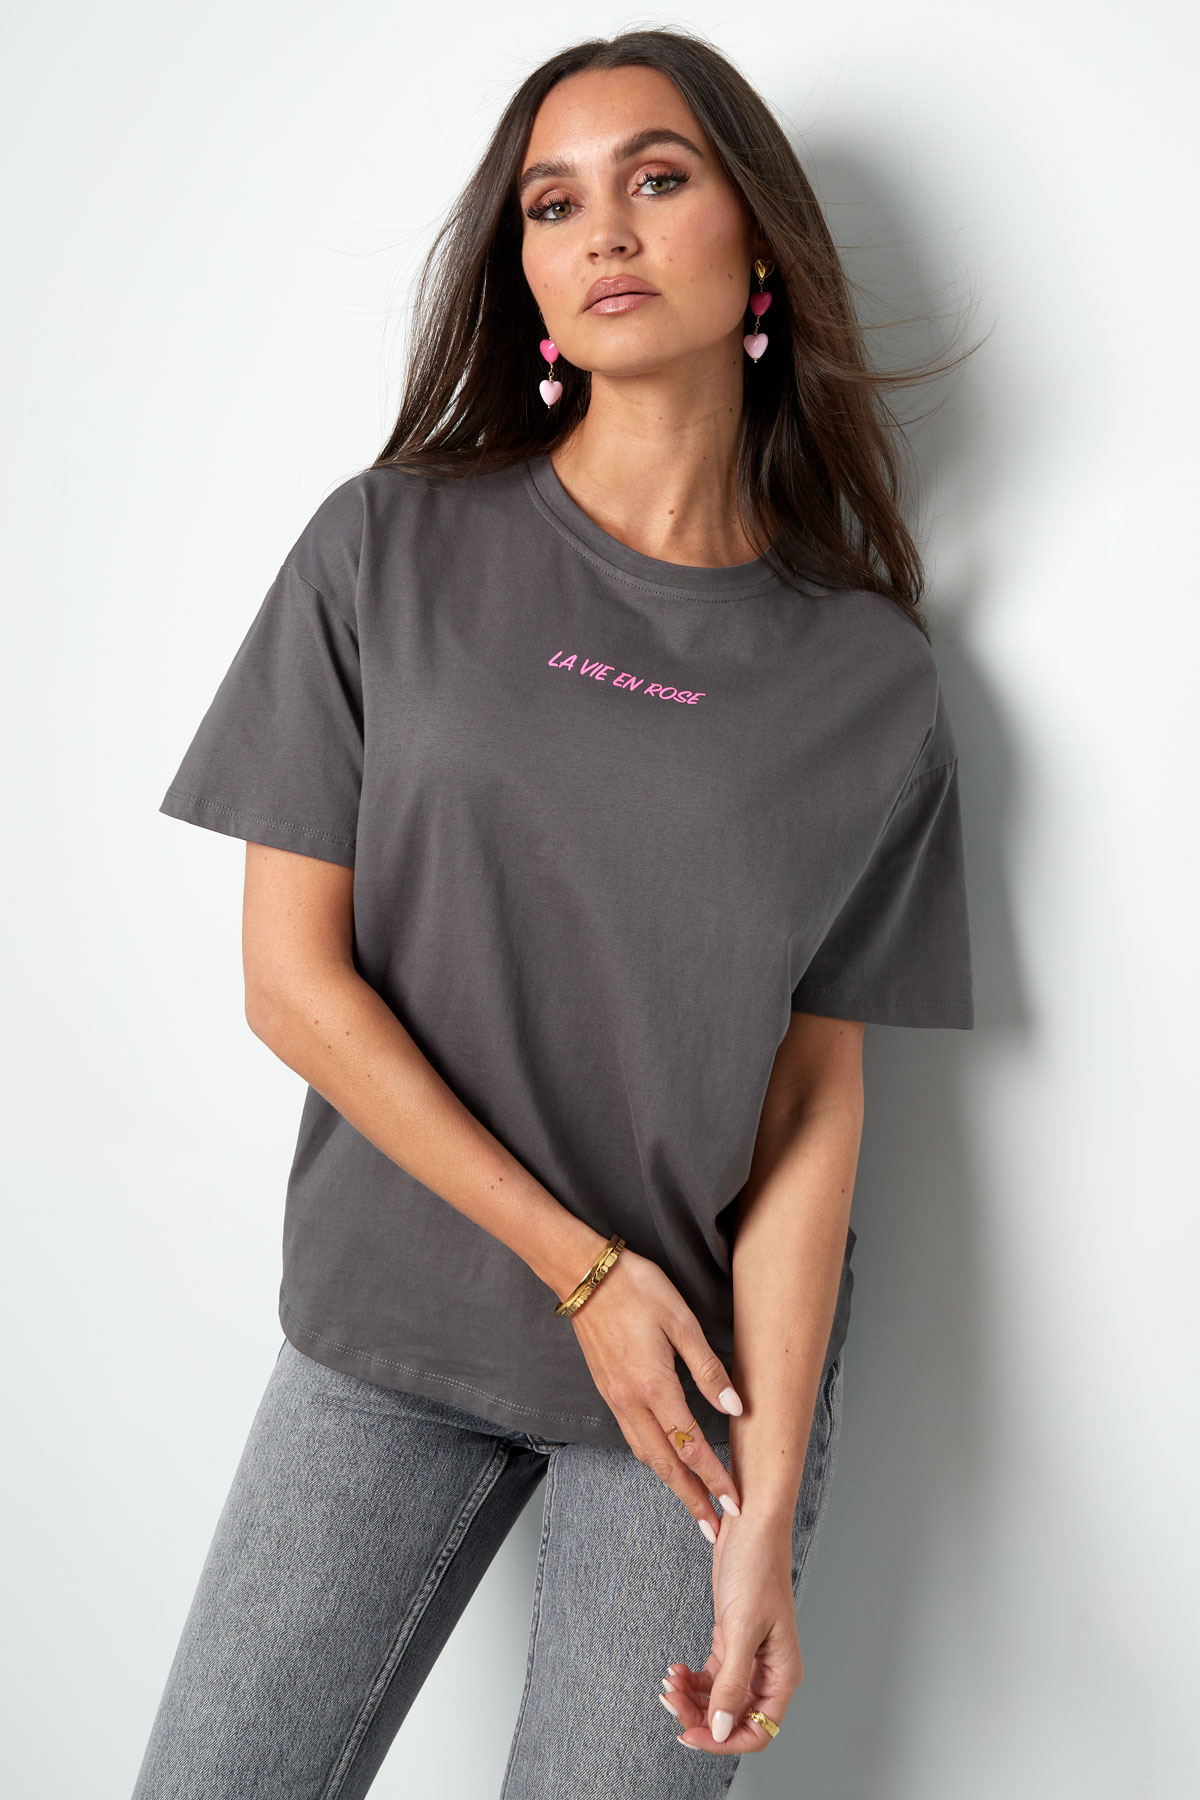 T-Shirt la vie en rose - dunkelgrau Bild2